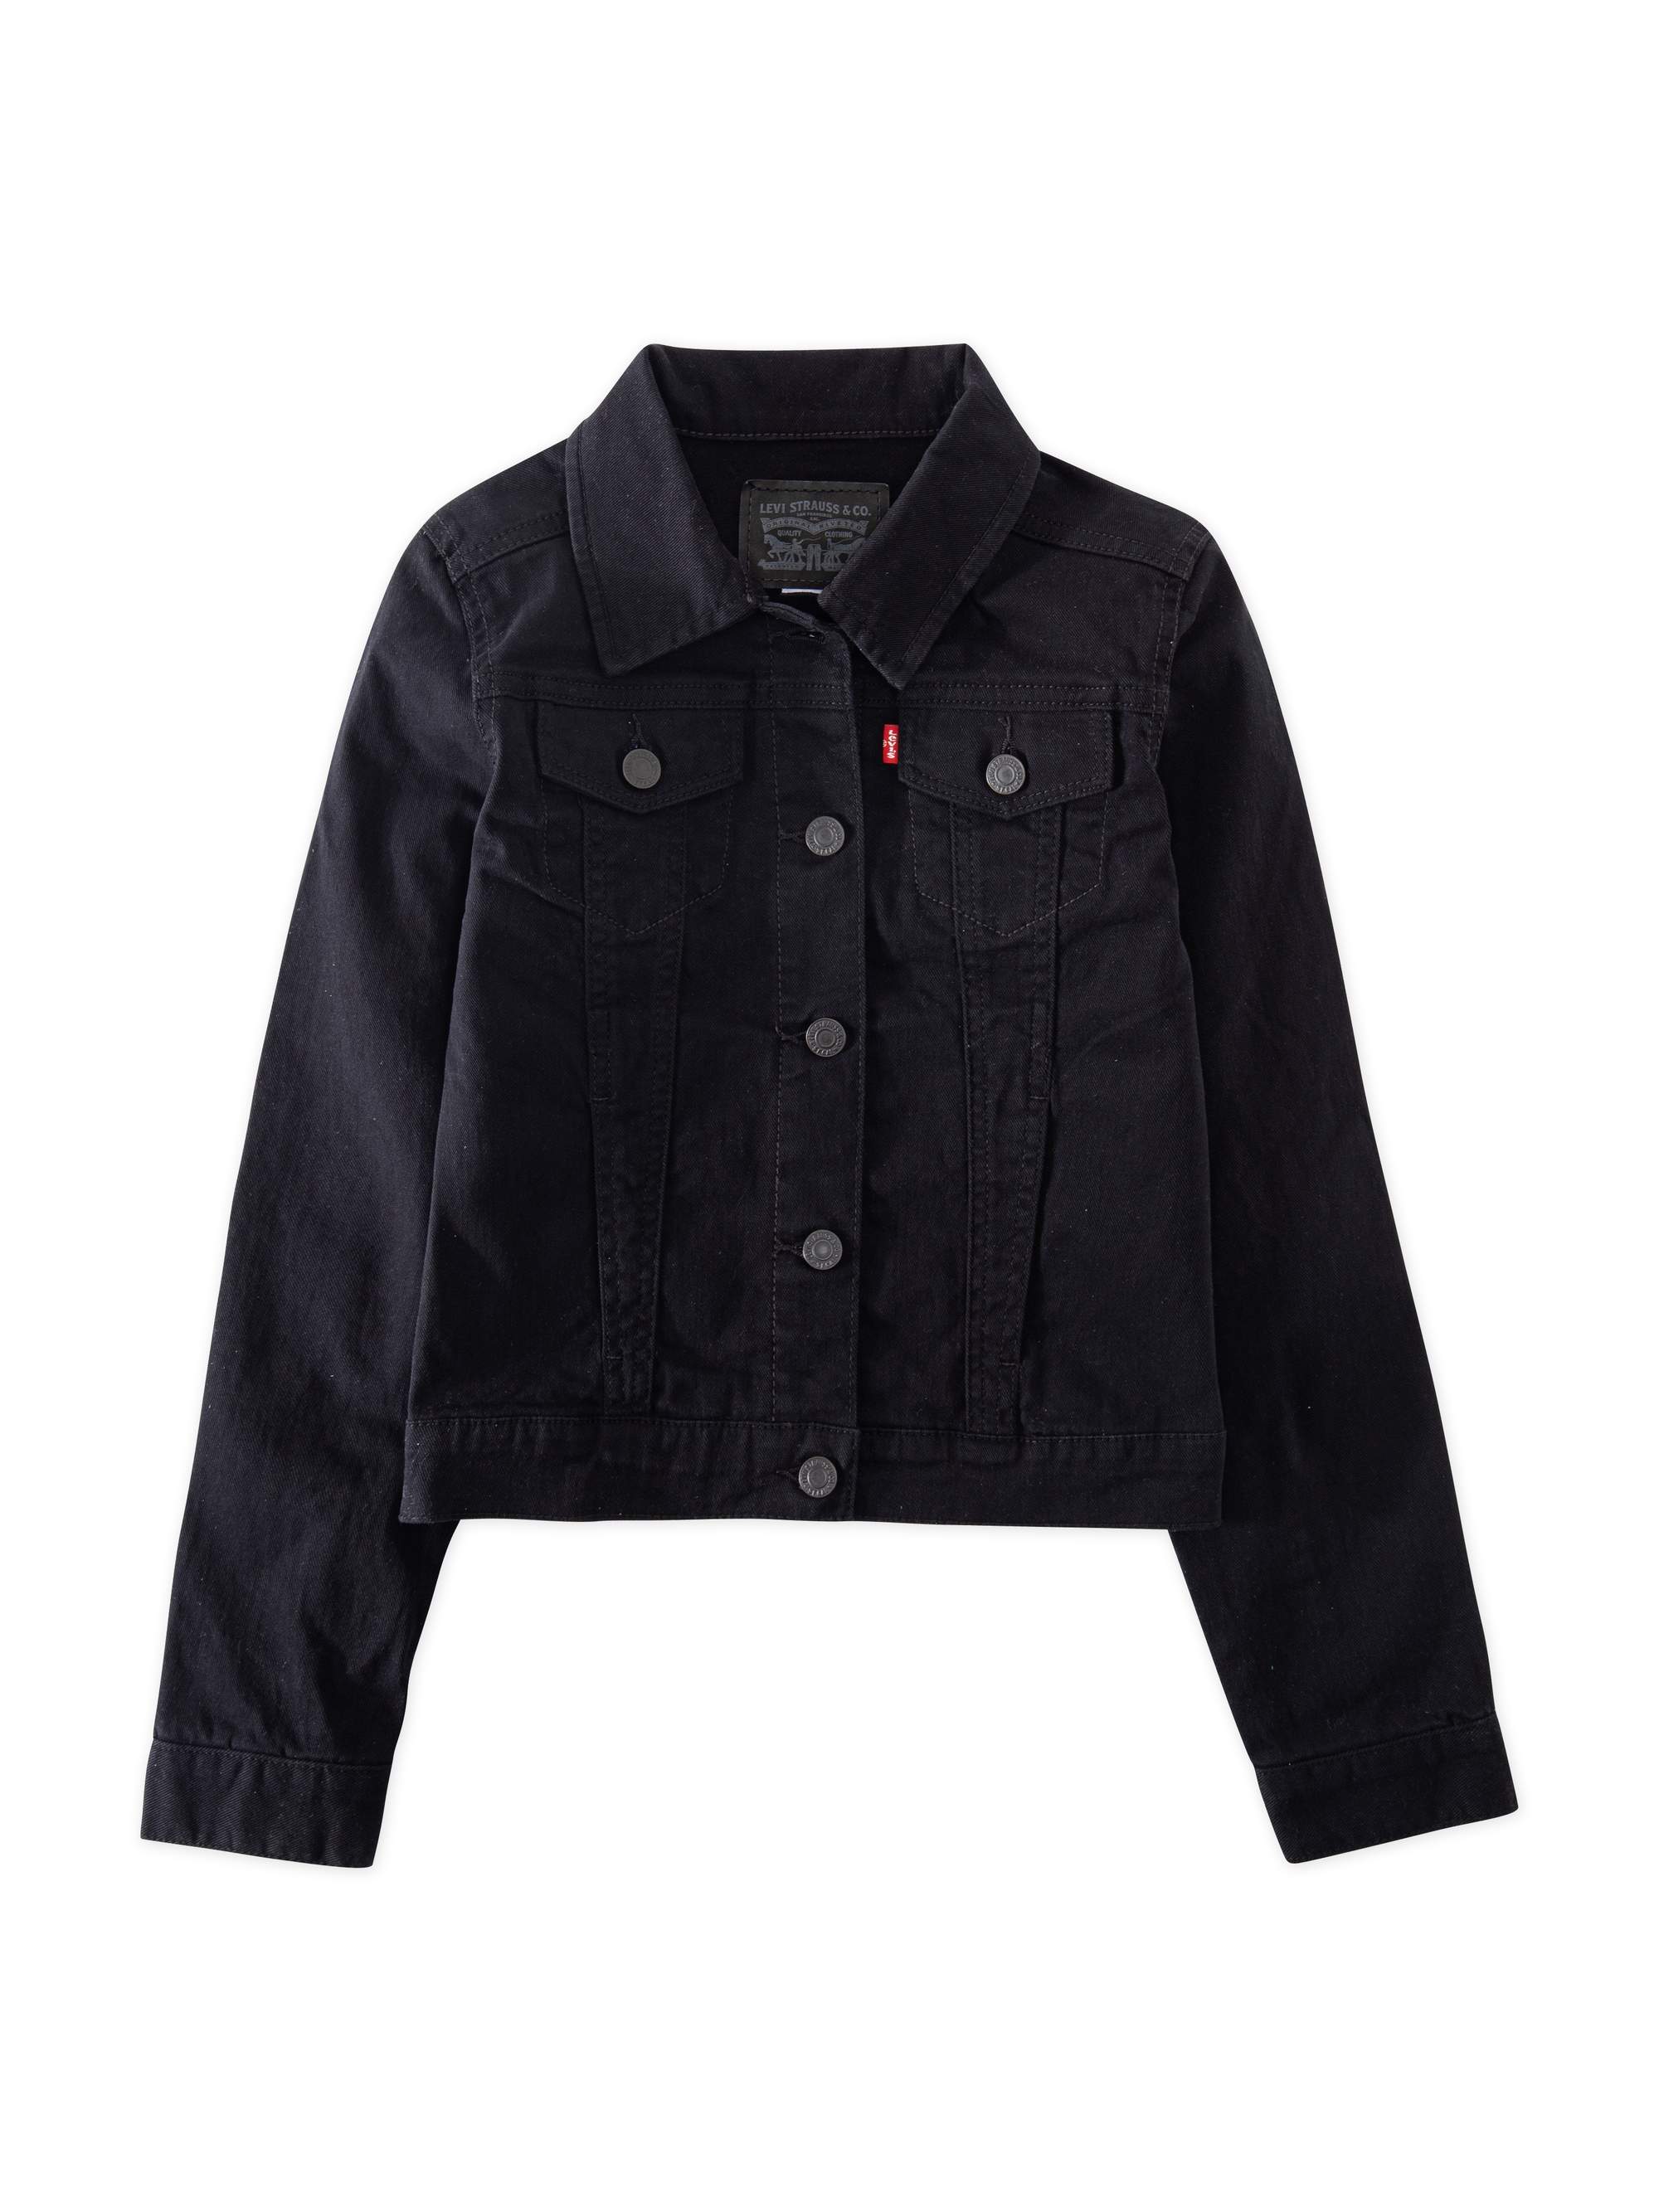 Levi's Girls' Denim Trucker Jacket, Sizes 4-16 - image 1 of 7